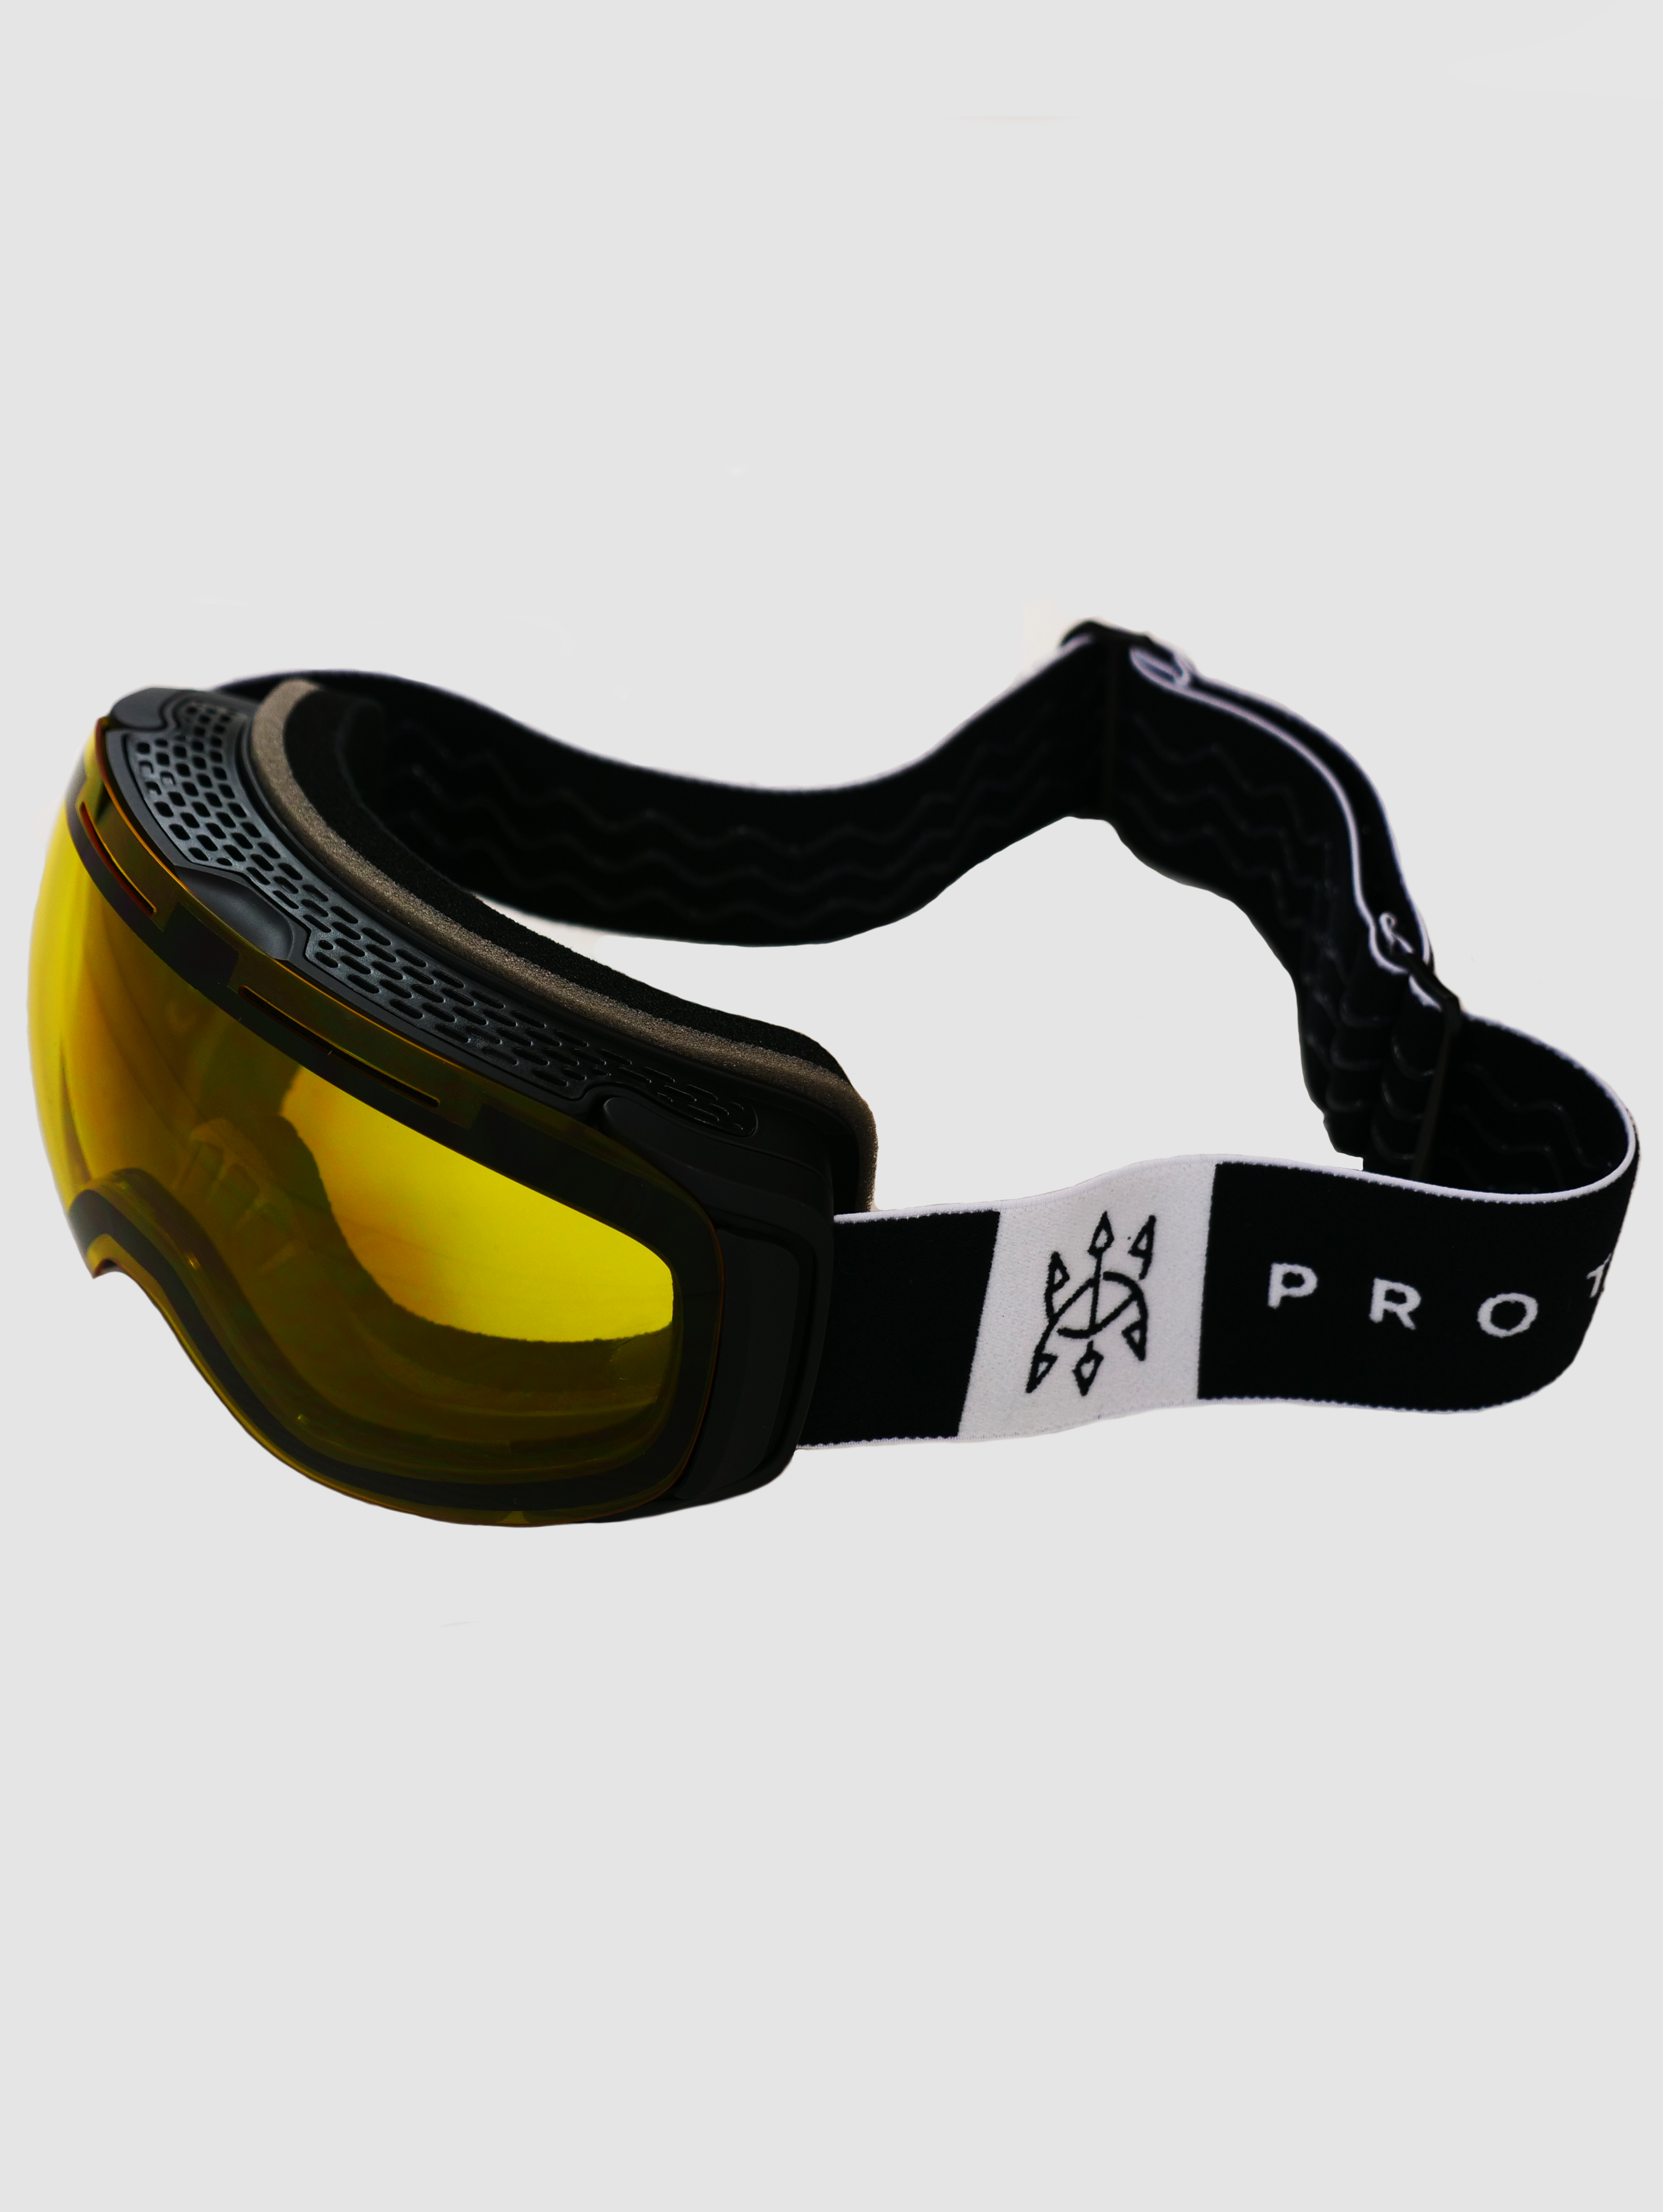 Proteus P2 Goggles - Proteus Snowboards